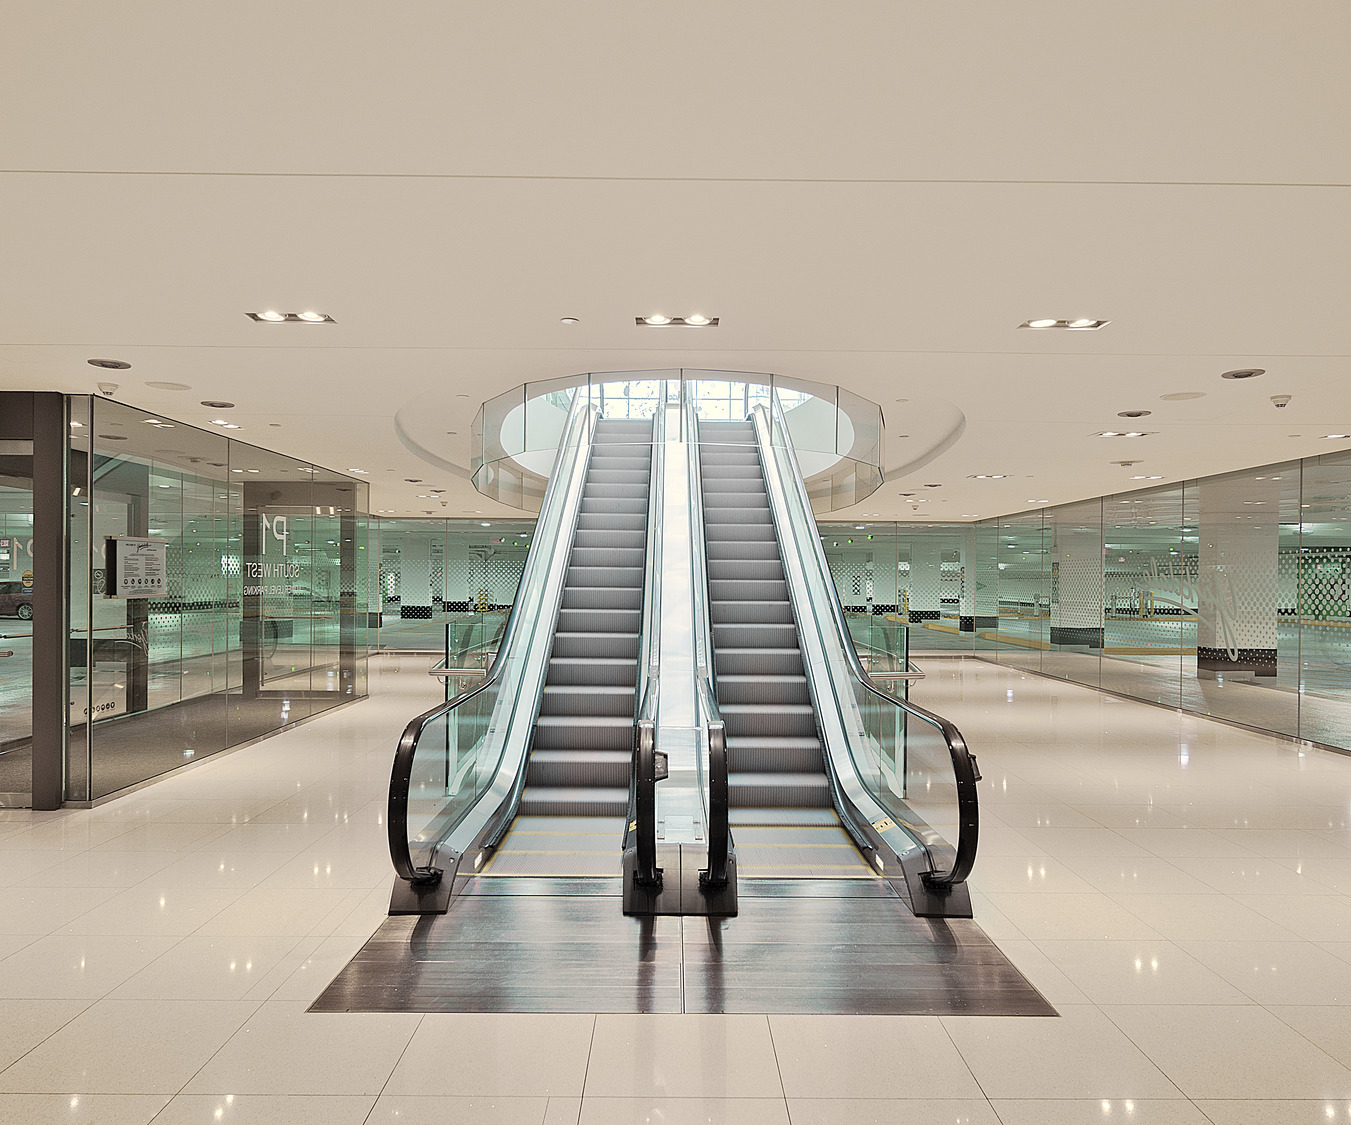 An escalator in a shopping mall.